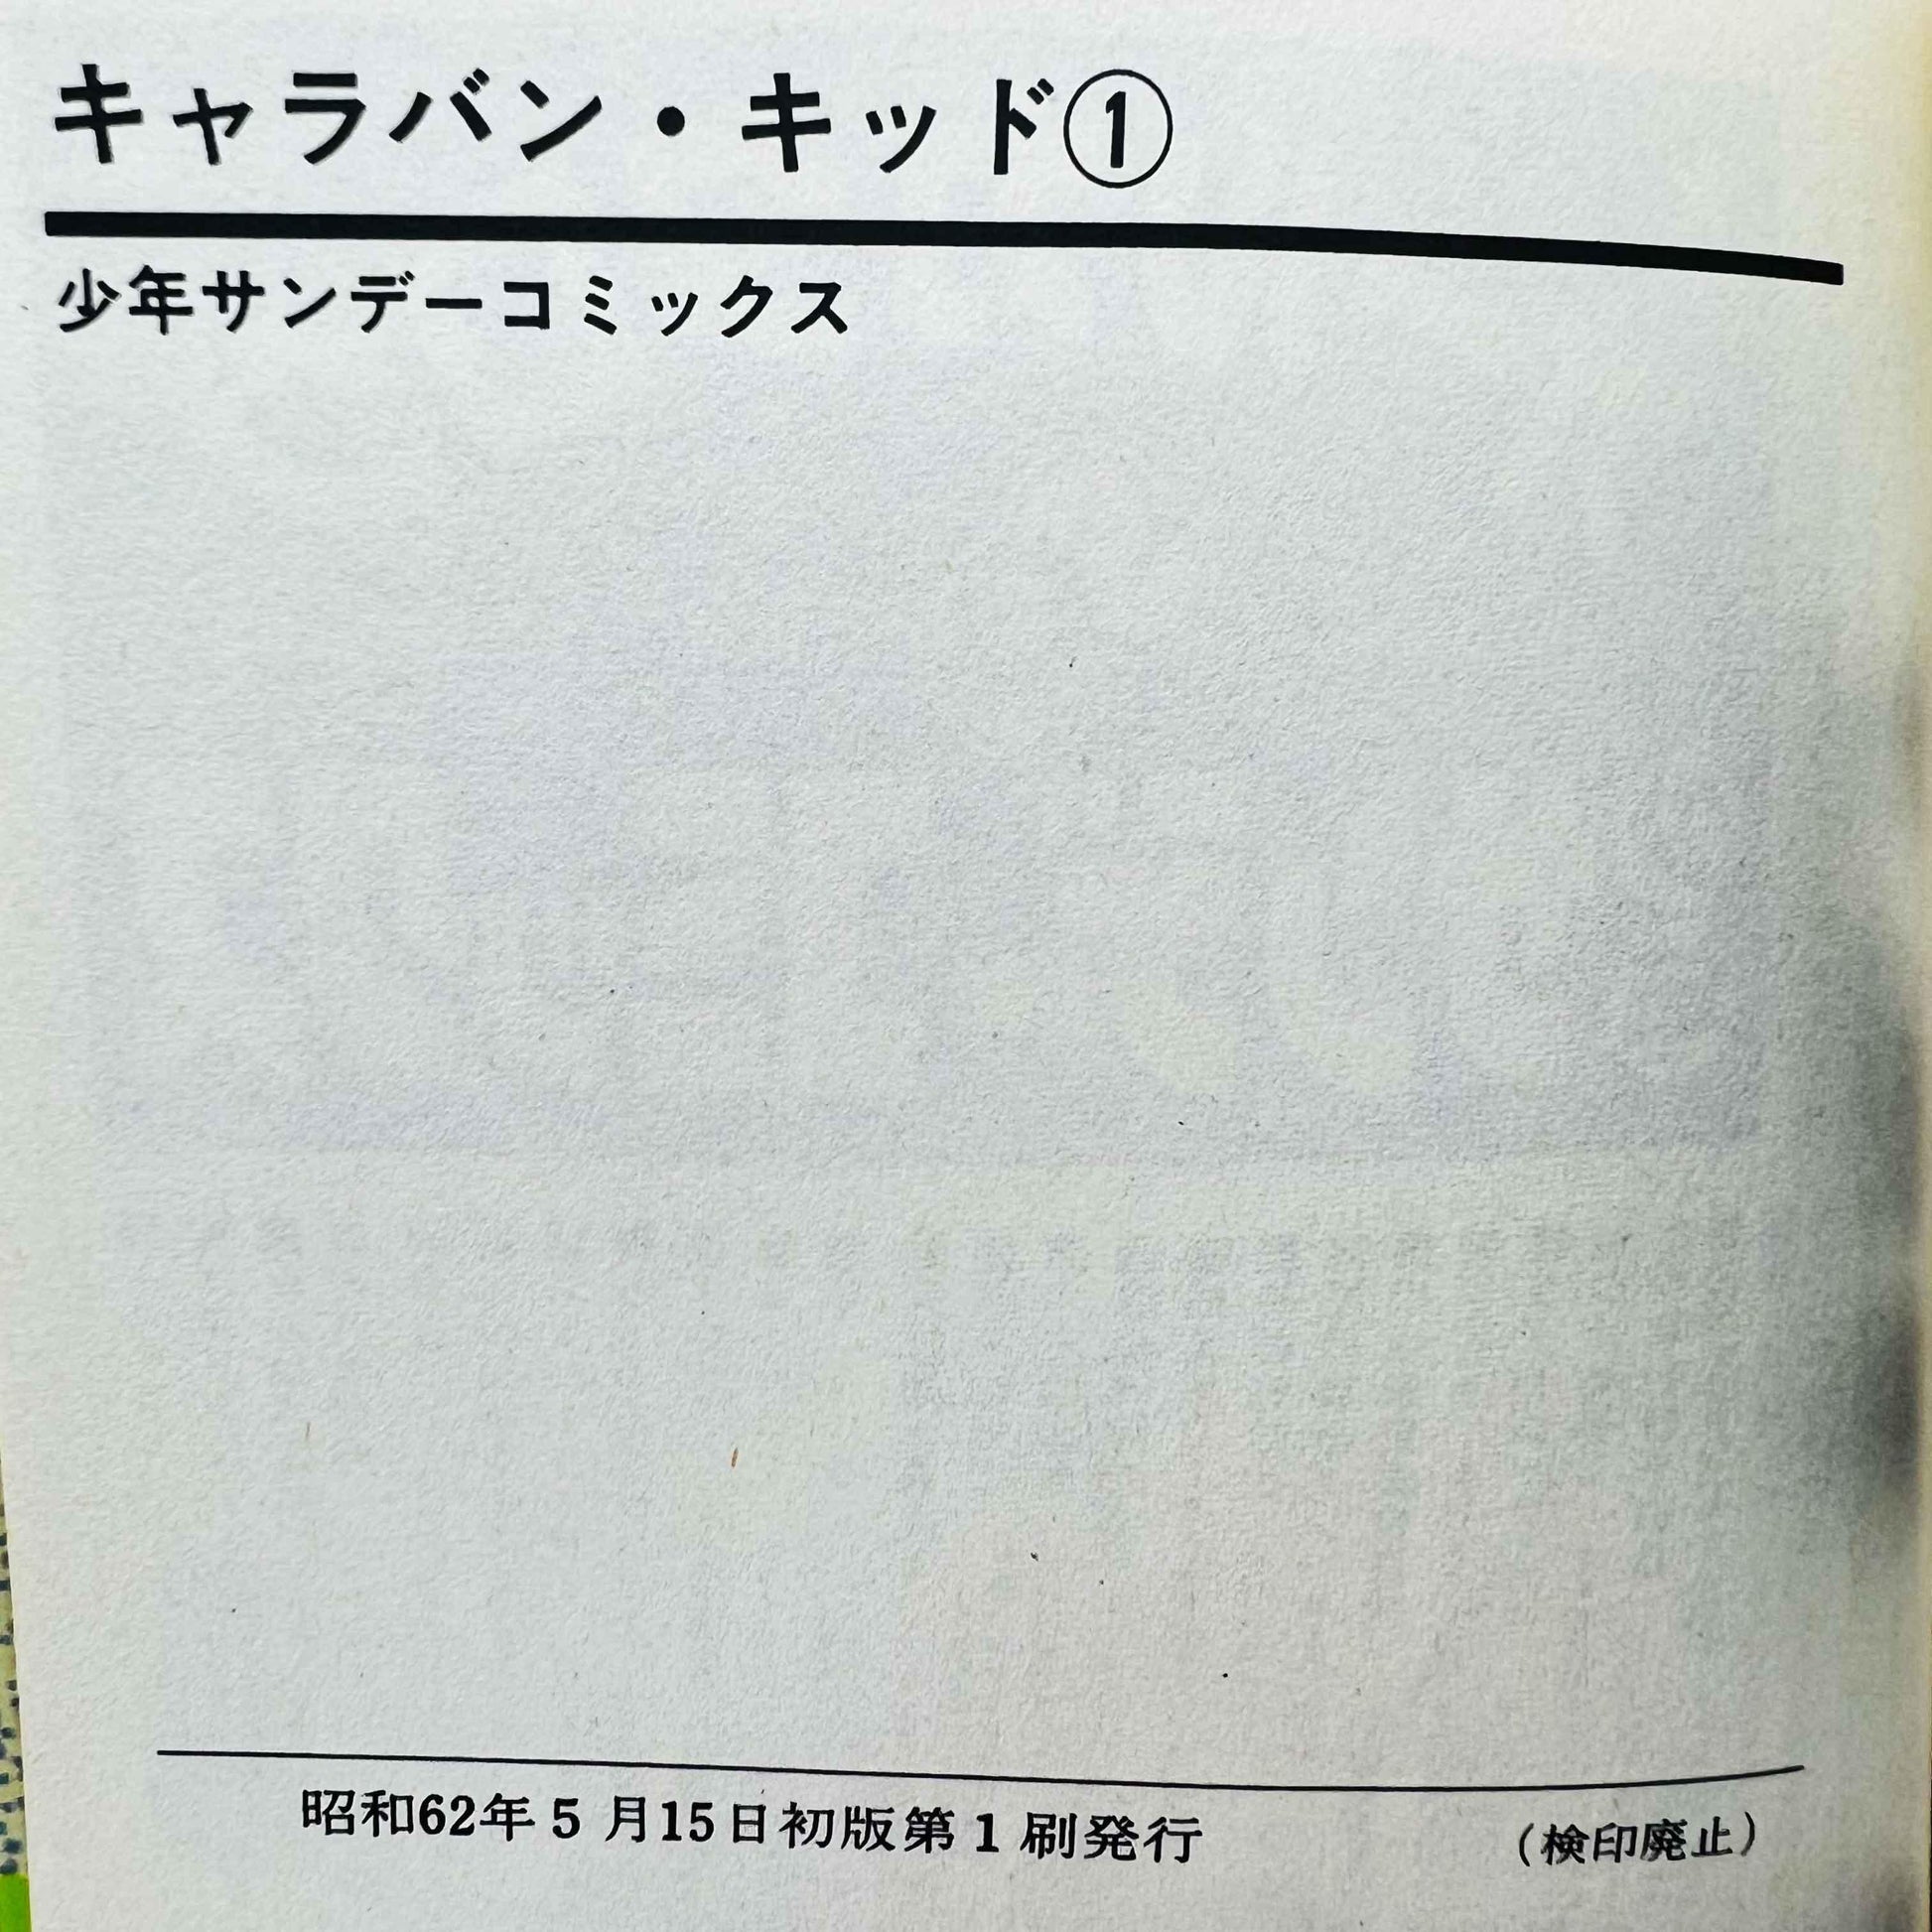 Caravan Kidd - Volume 01 - 1stPrint.net - 1st First Print Edition Manga Store - M-CARAVAN-01-001